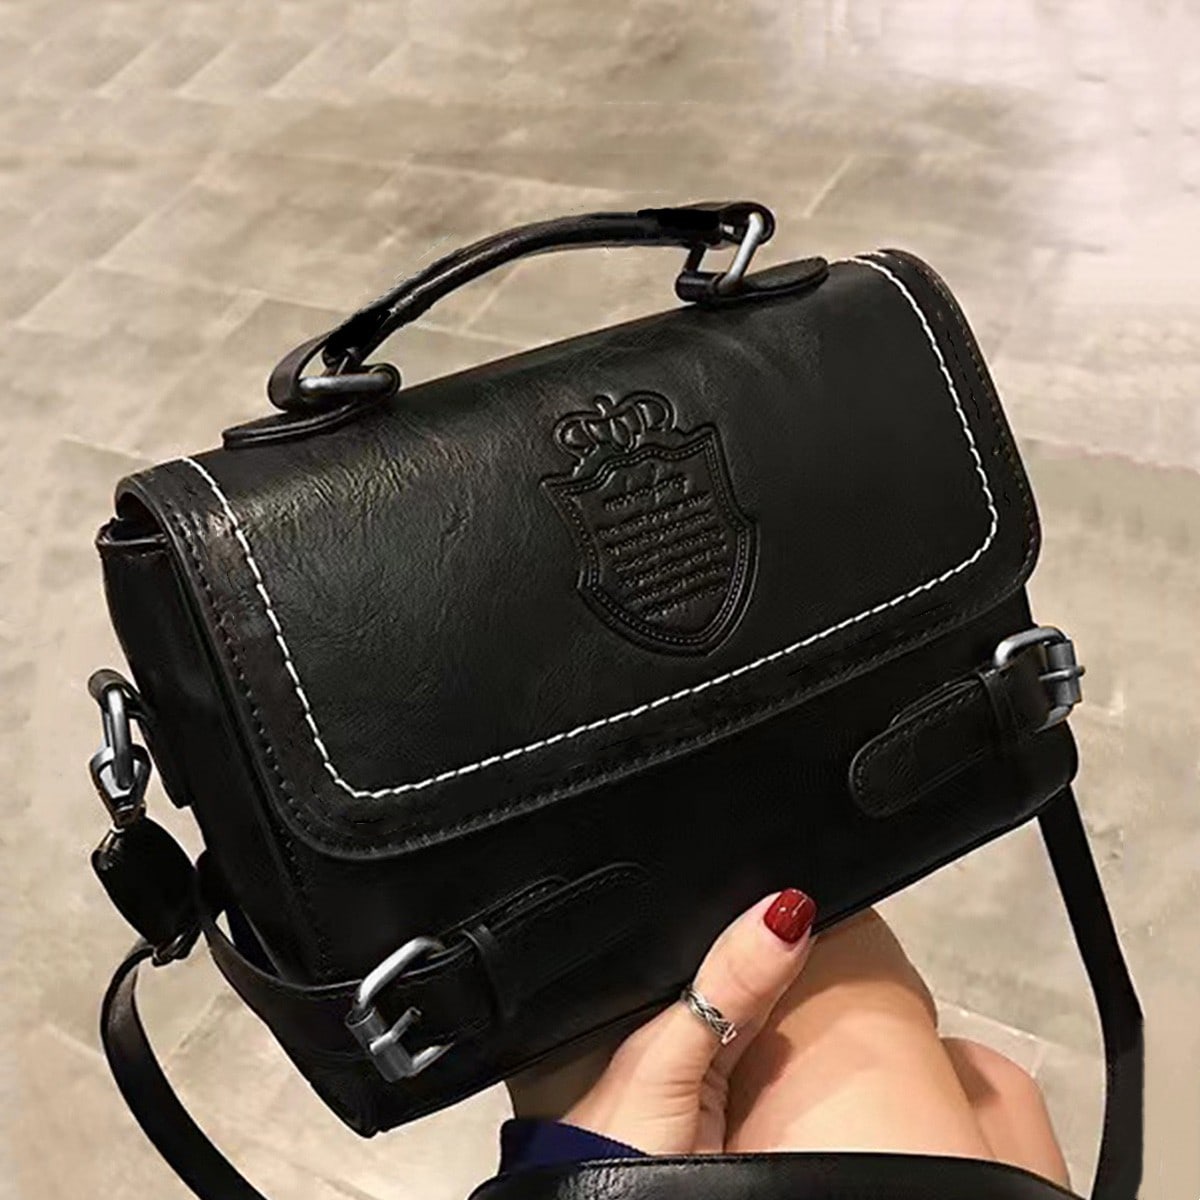 Classic Double Top Handle Bag - Black